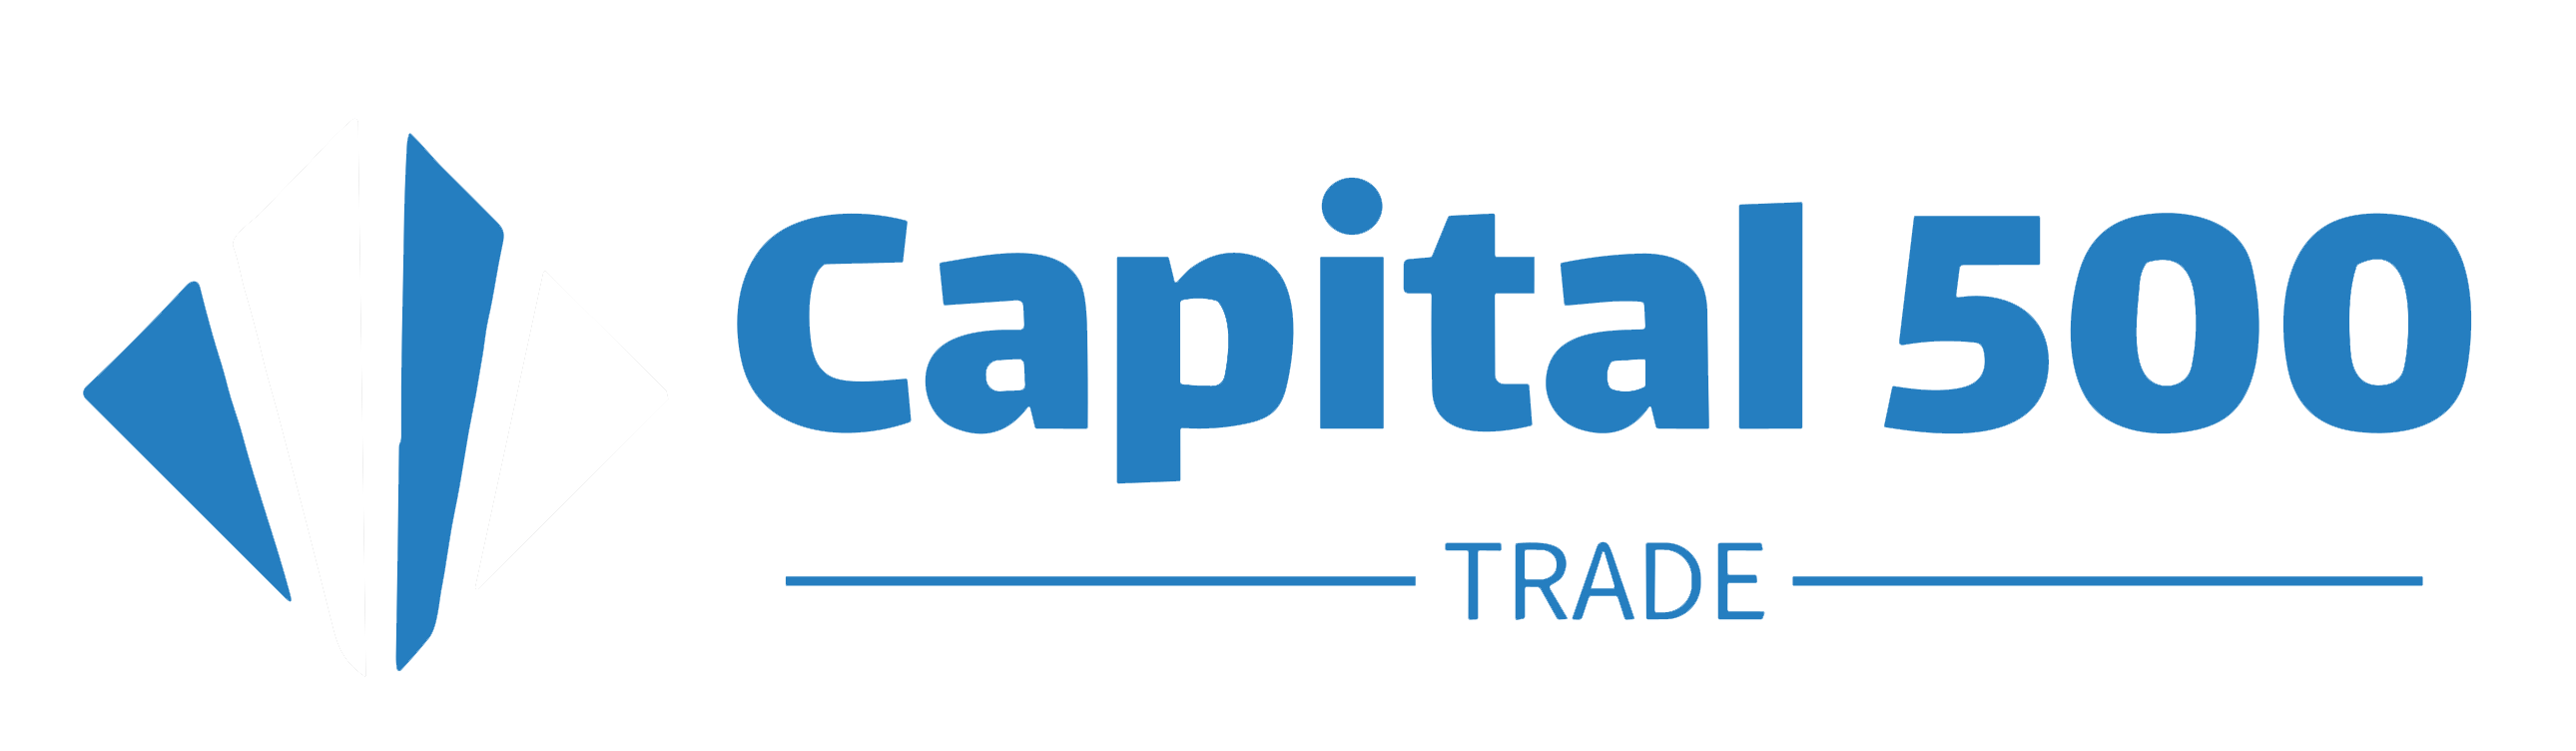 Capital500trade